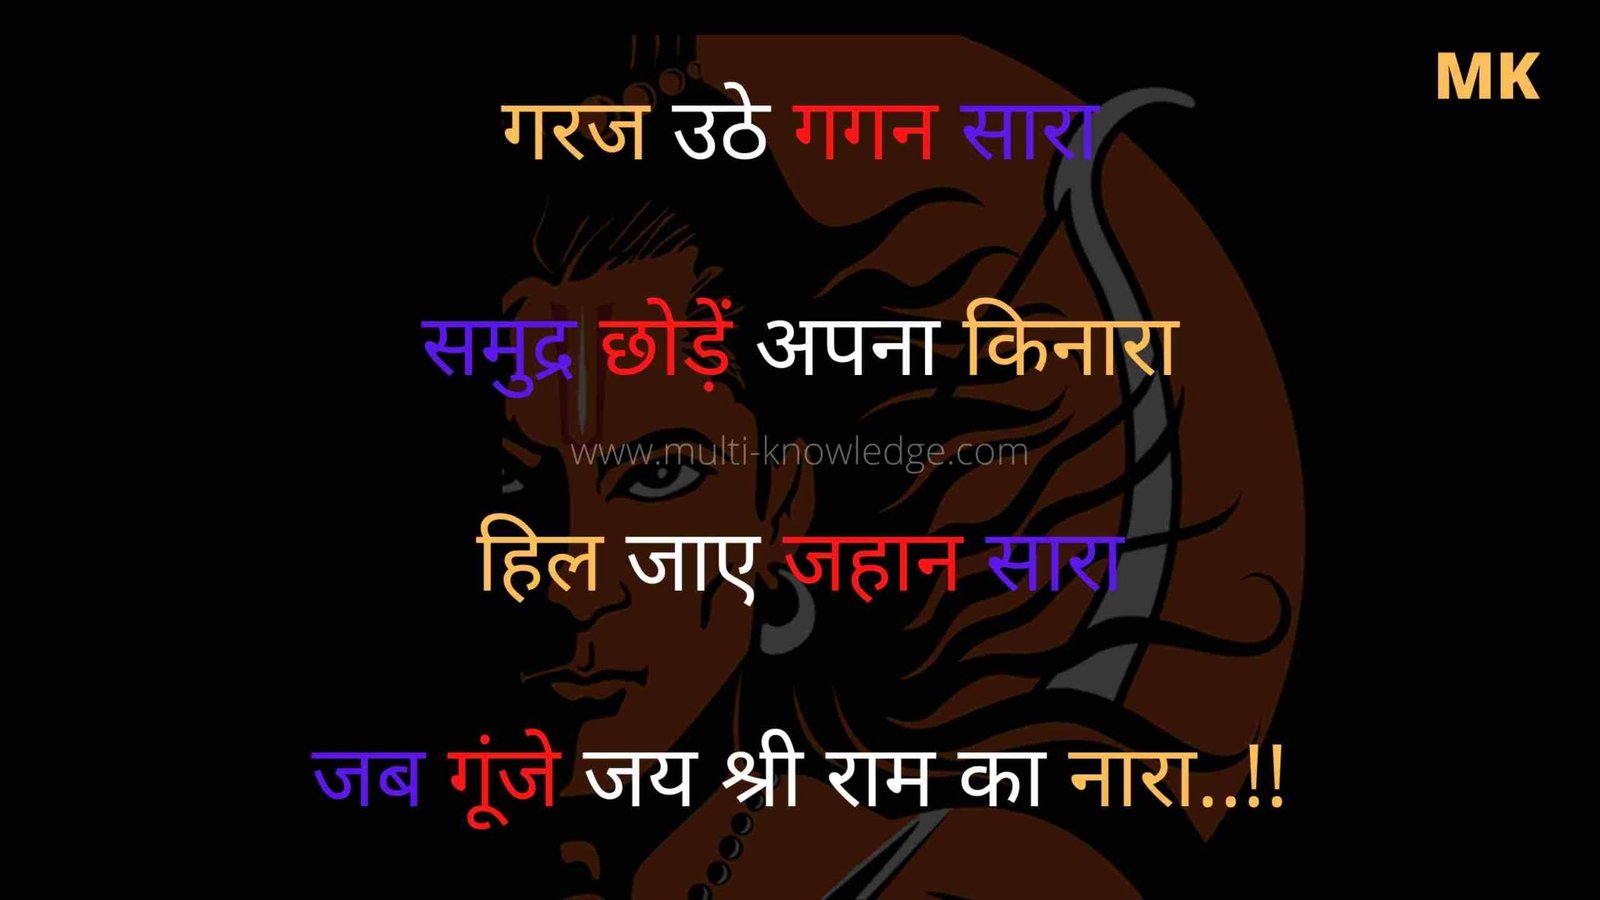 Super Jai Shri Ram Attitude Status in Hindi with images by multi-knowledge.com